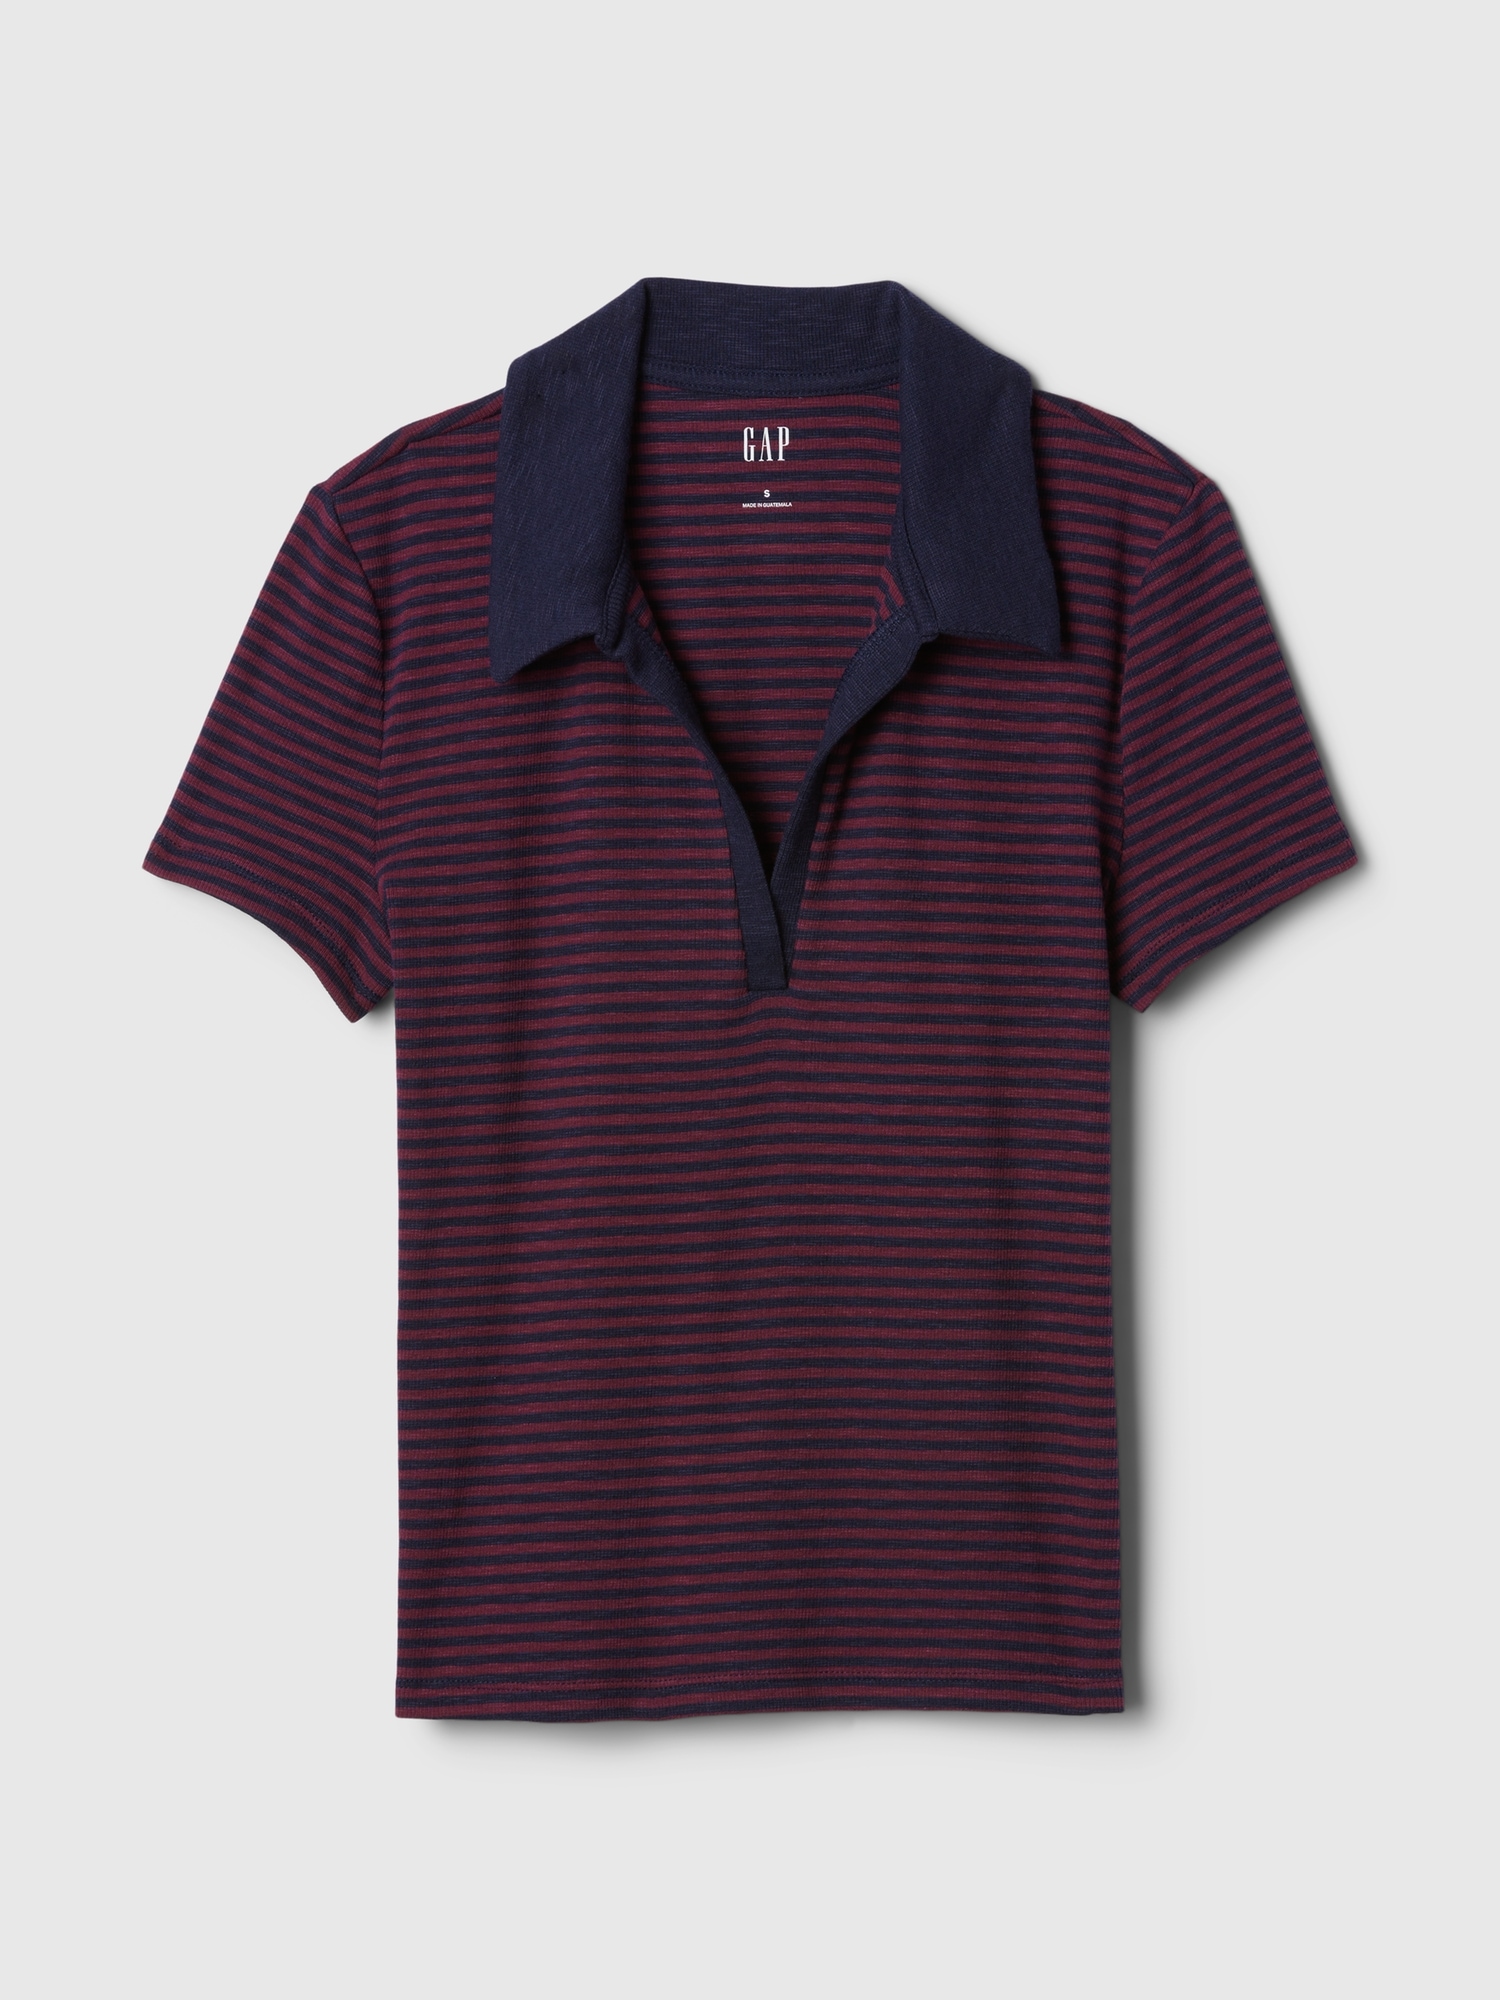 Shop Gap Essential Rib Polo Shirt Shirt In Navy Blue & Burgundy Stripe